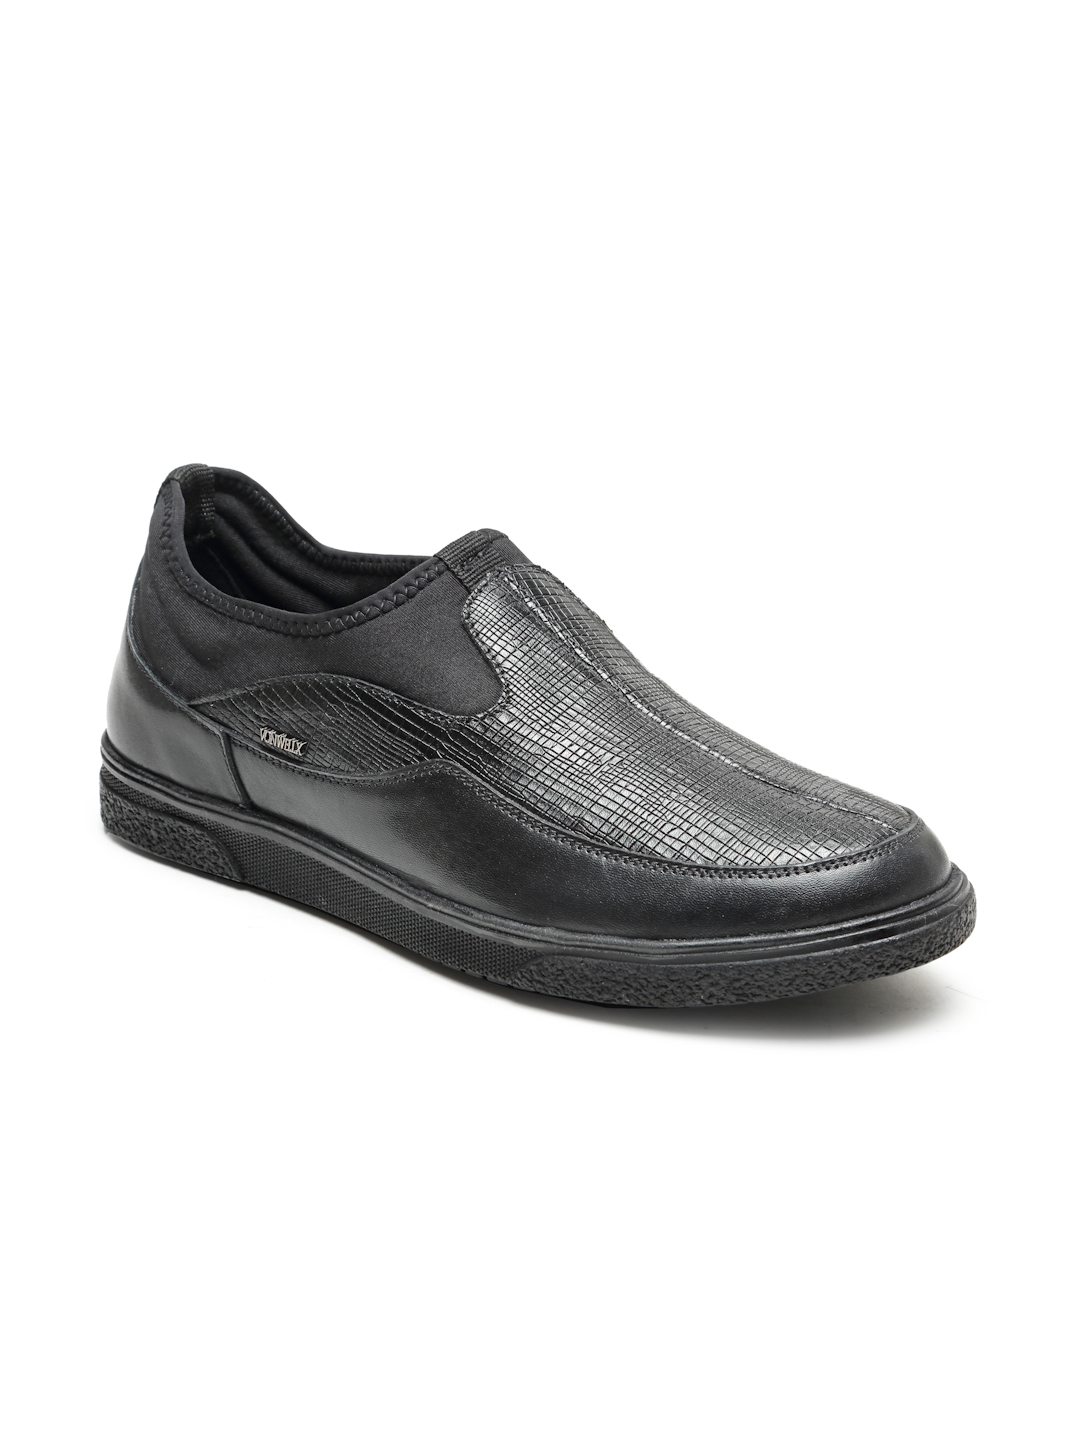 Buy Von Wellx Germany Comfort Men's Black Casual Loafers Everett Online in Visakhapatnam